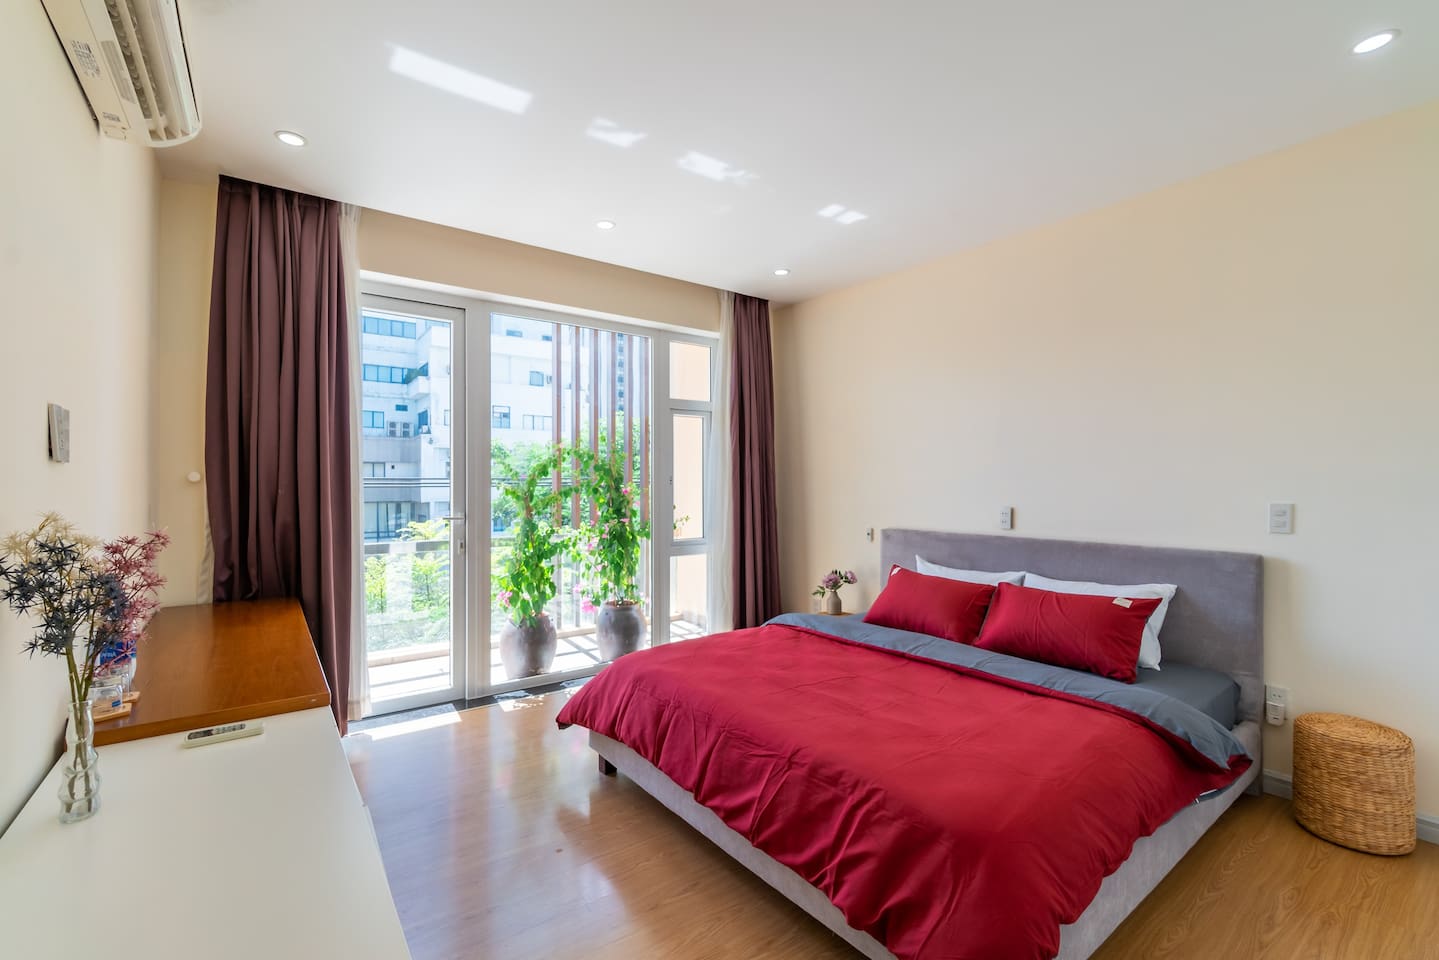 BEDROOM 3 (30 sqm at Floor 3) brings cozy and restful ambience 